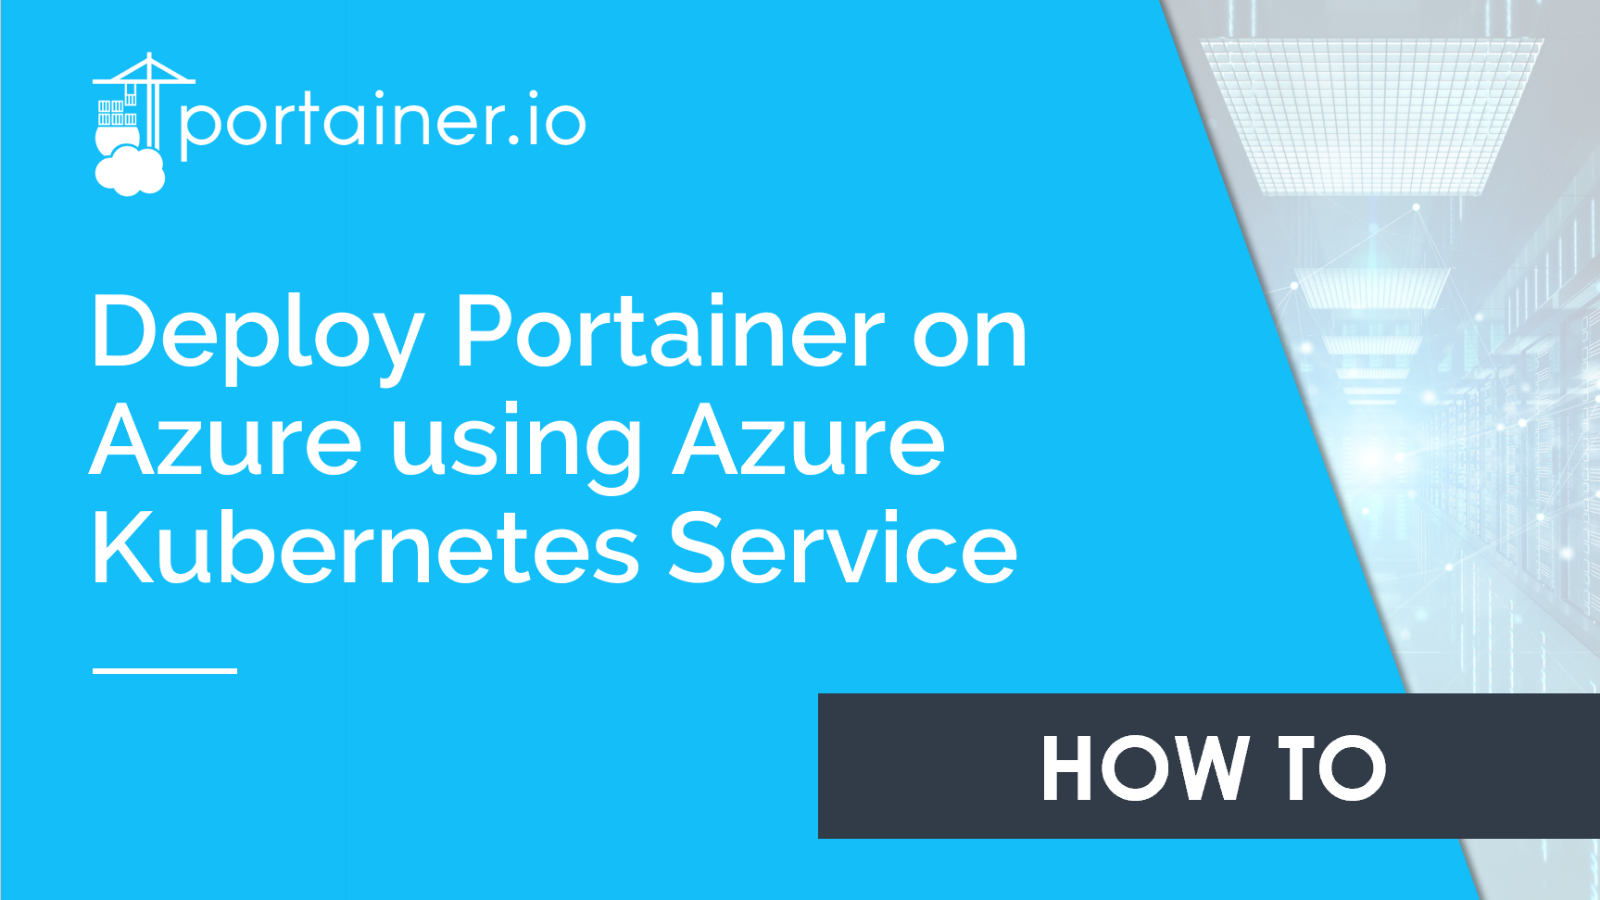 How to deploy Portainer on Azure using Azure Kubernetes Service (AKS)